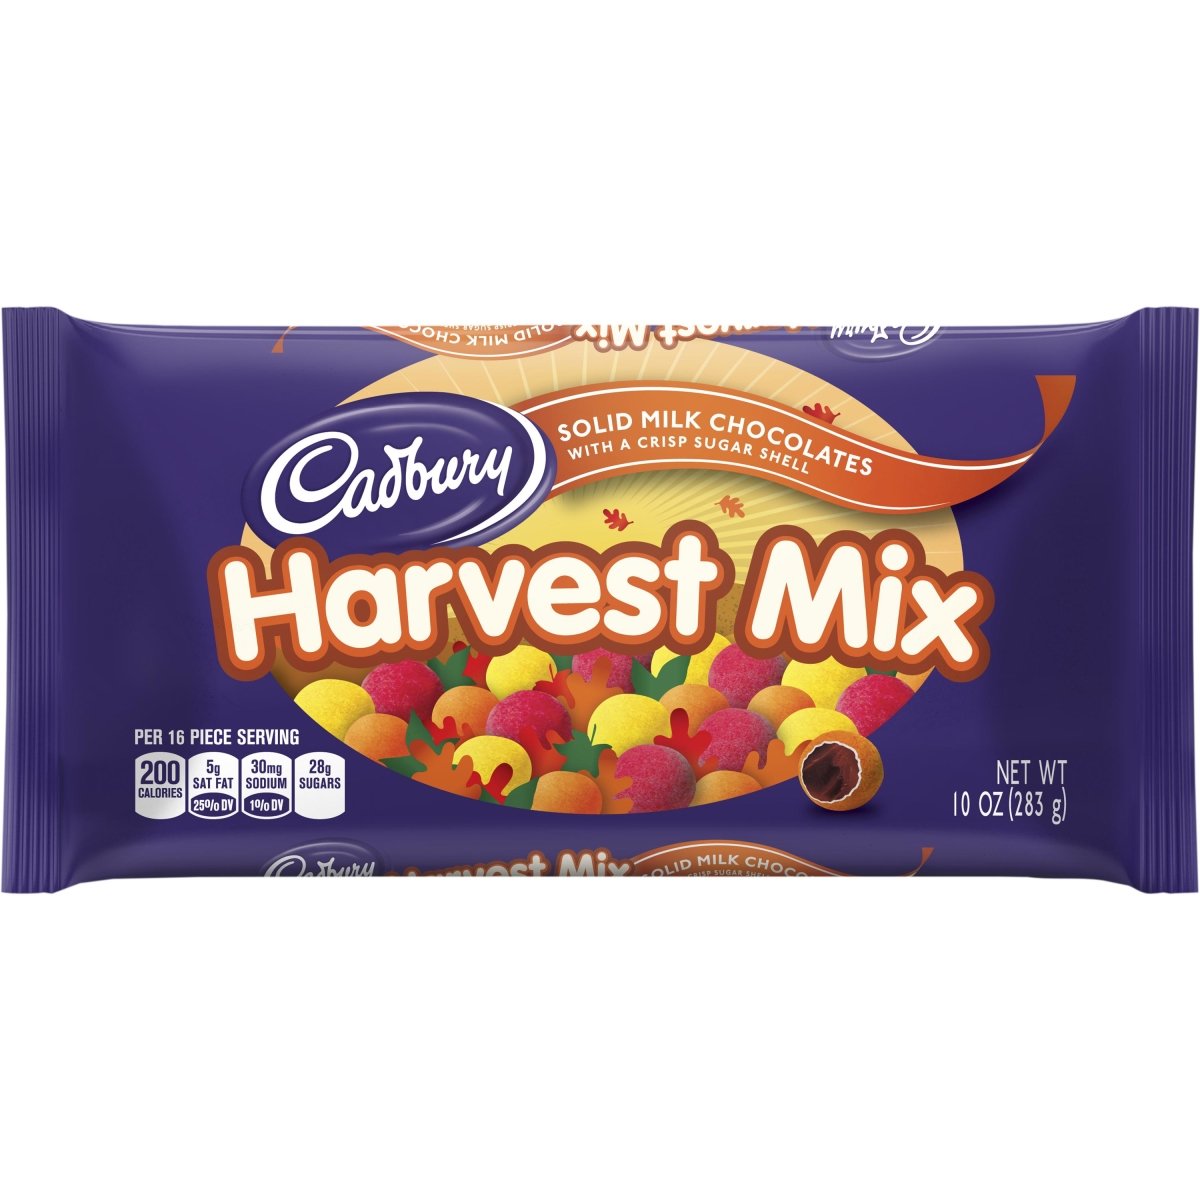 Cadbury's Harvest Mix 283g - Candy Mail UK